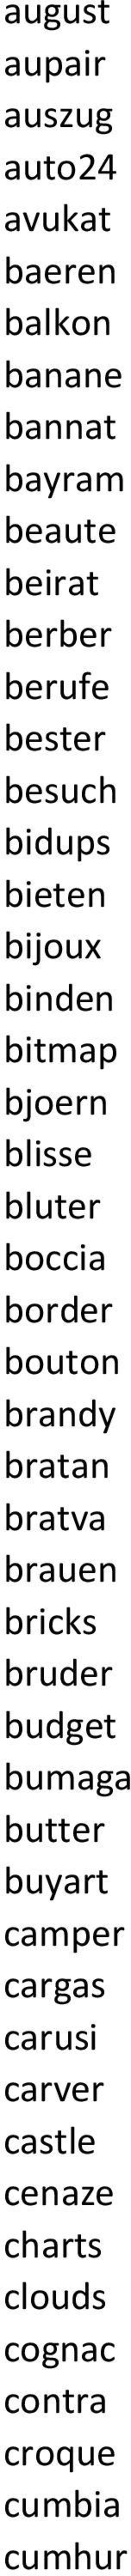 boccia border bouton brandy bratan bratva brauen bricks bruder bud bumaga butter